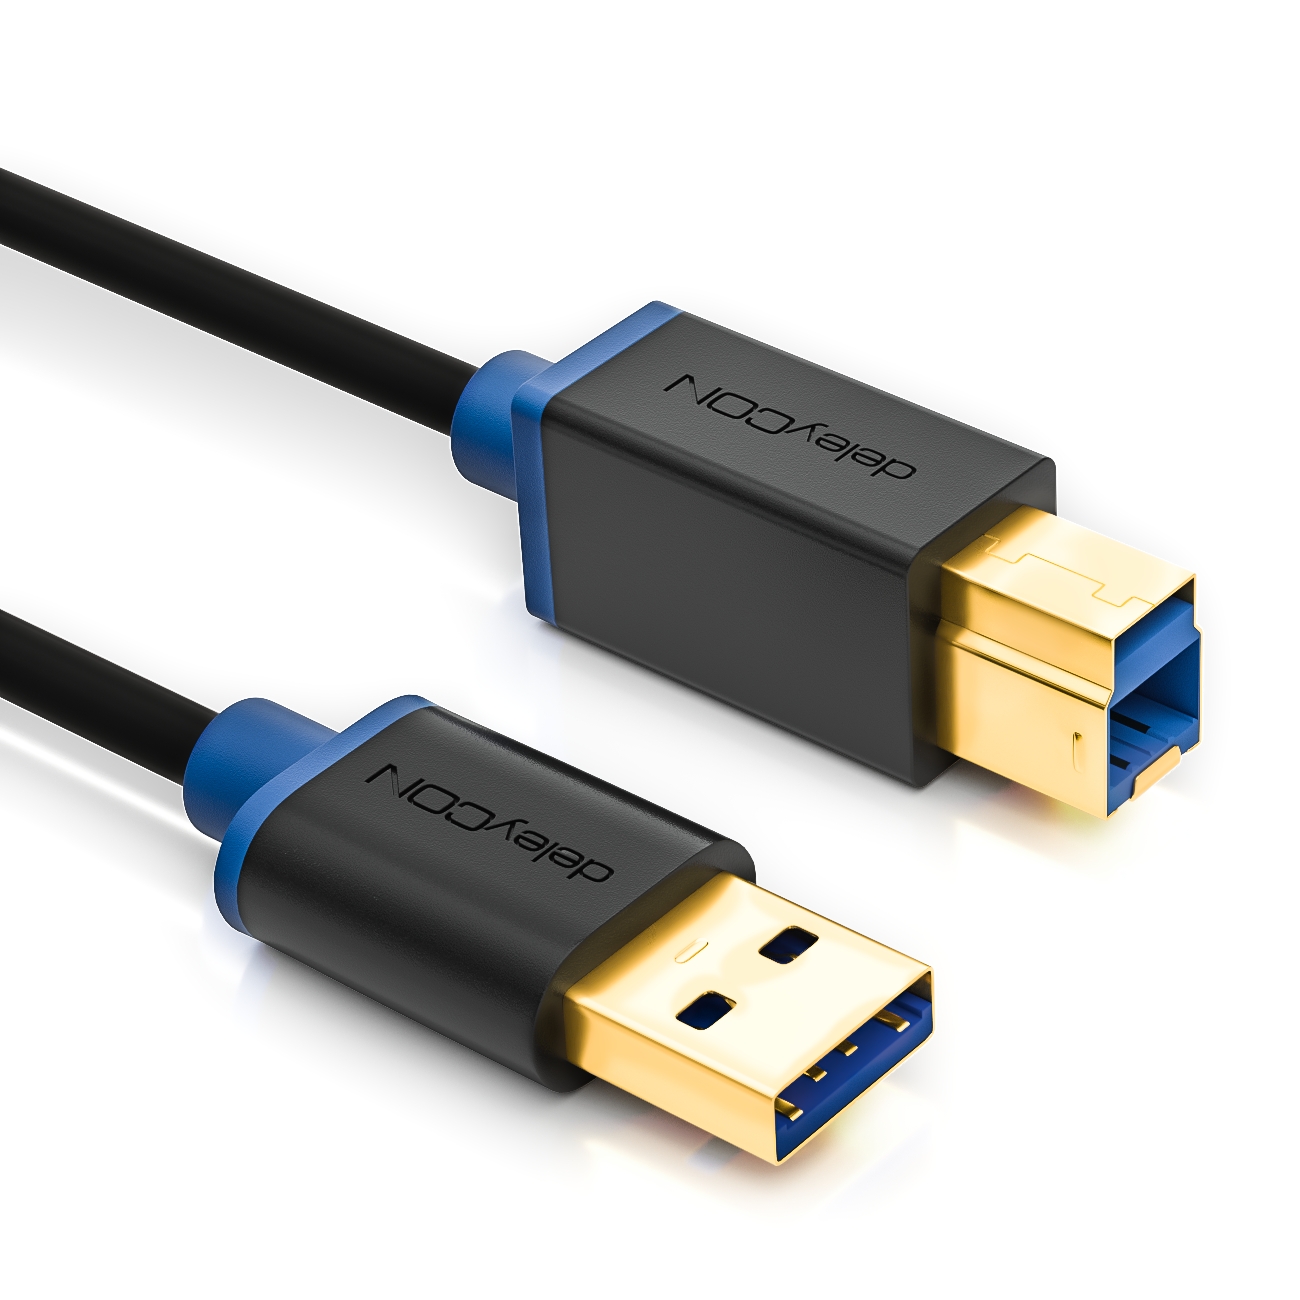 Top-Longer USB 3.0-Druckerkabel A-Stecker auf B-Stecker Anschlusskabel Scannerkabel USB Kabel USB Kabel 3.0 Typ A zu Typ B 1m 